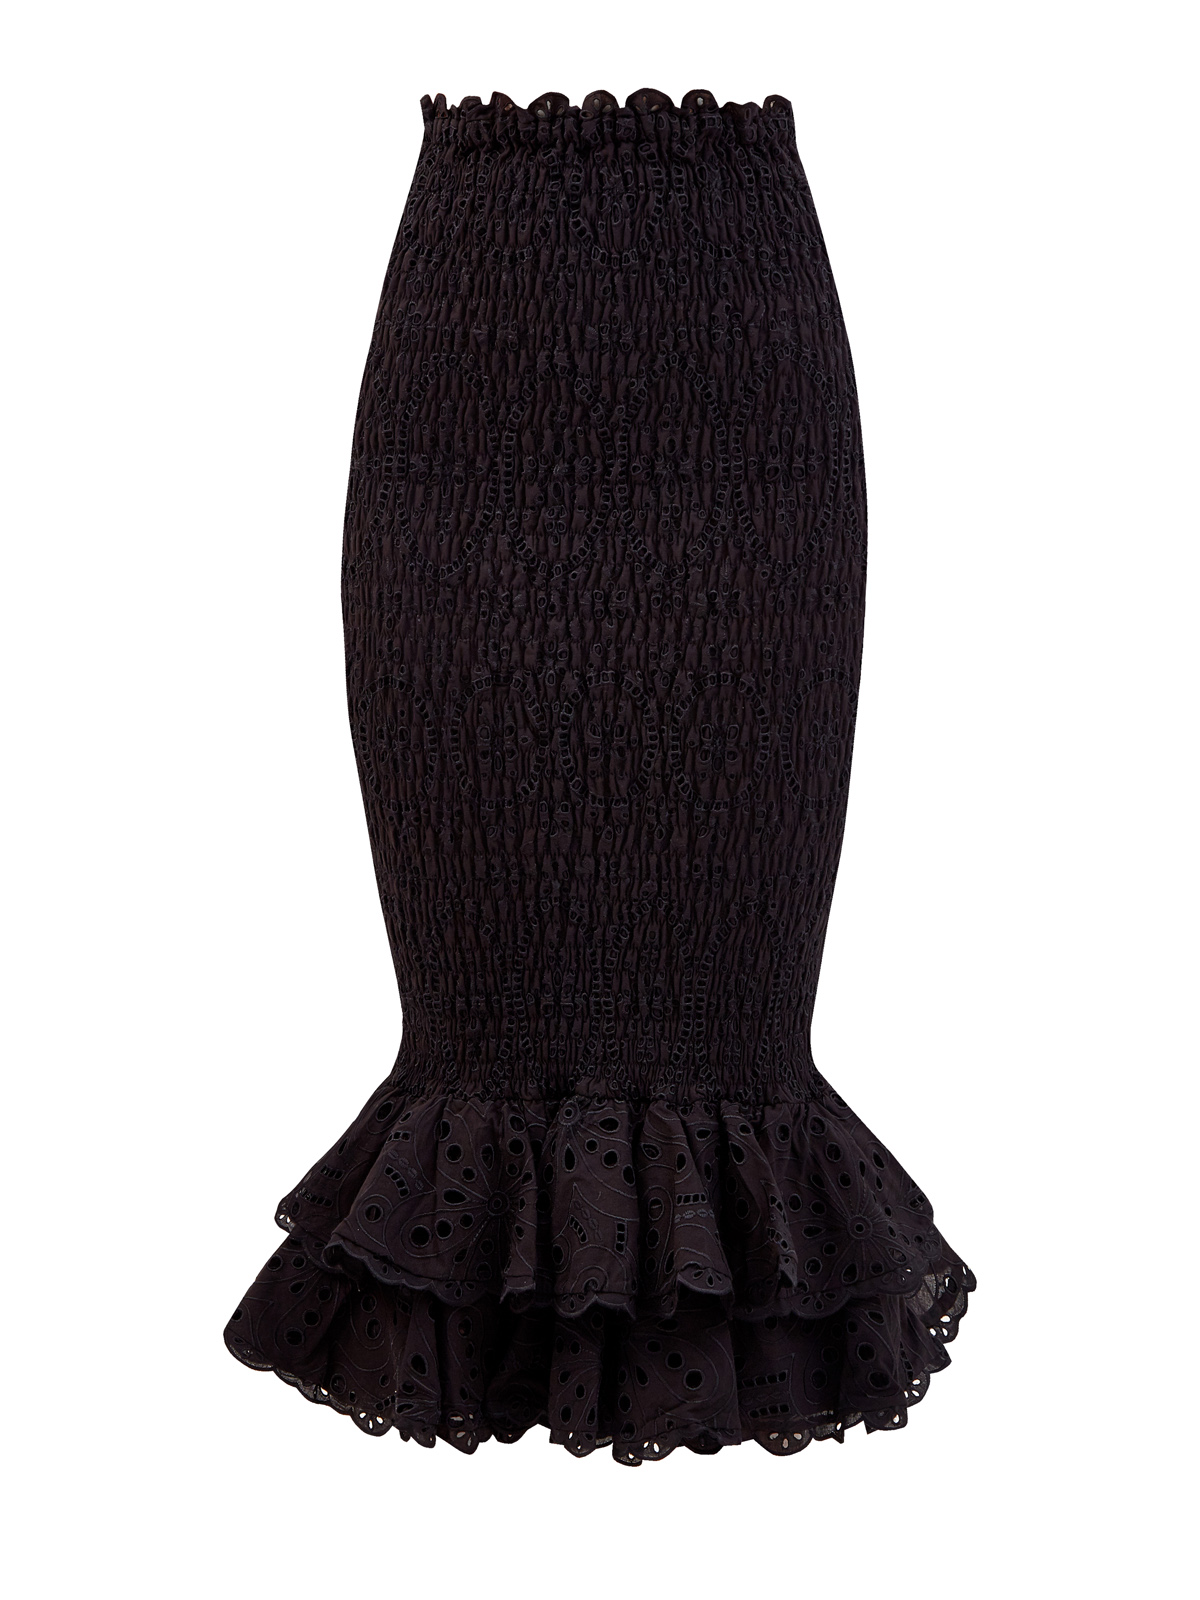 Облегающая юбка Liliana с подолом в стиле фламенко